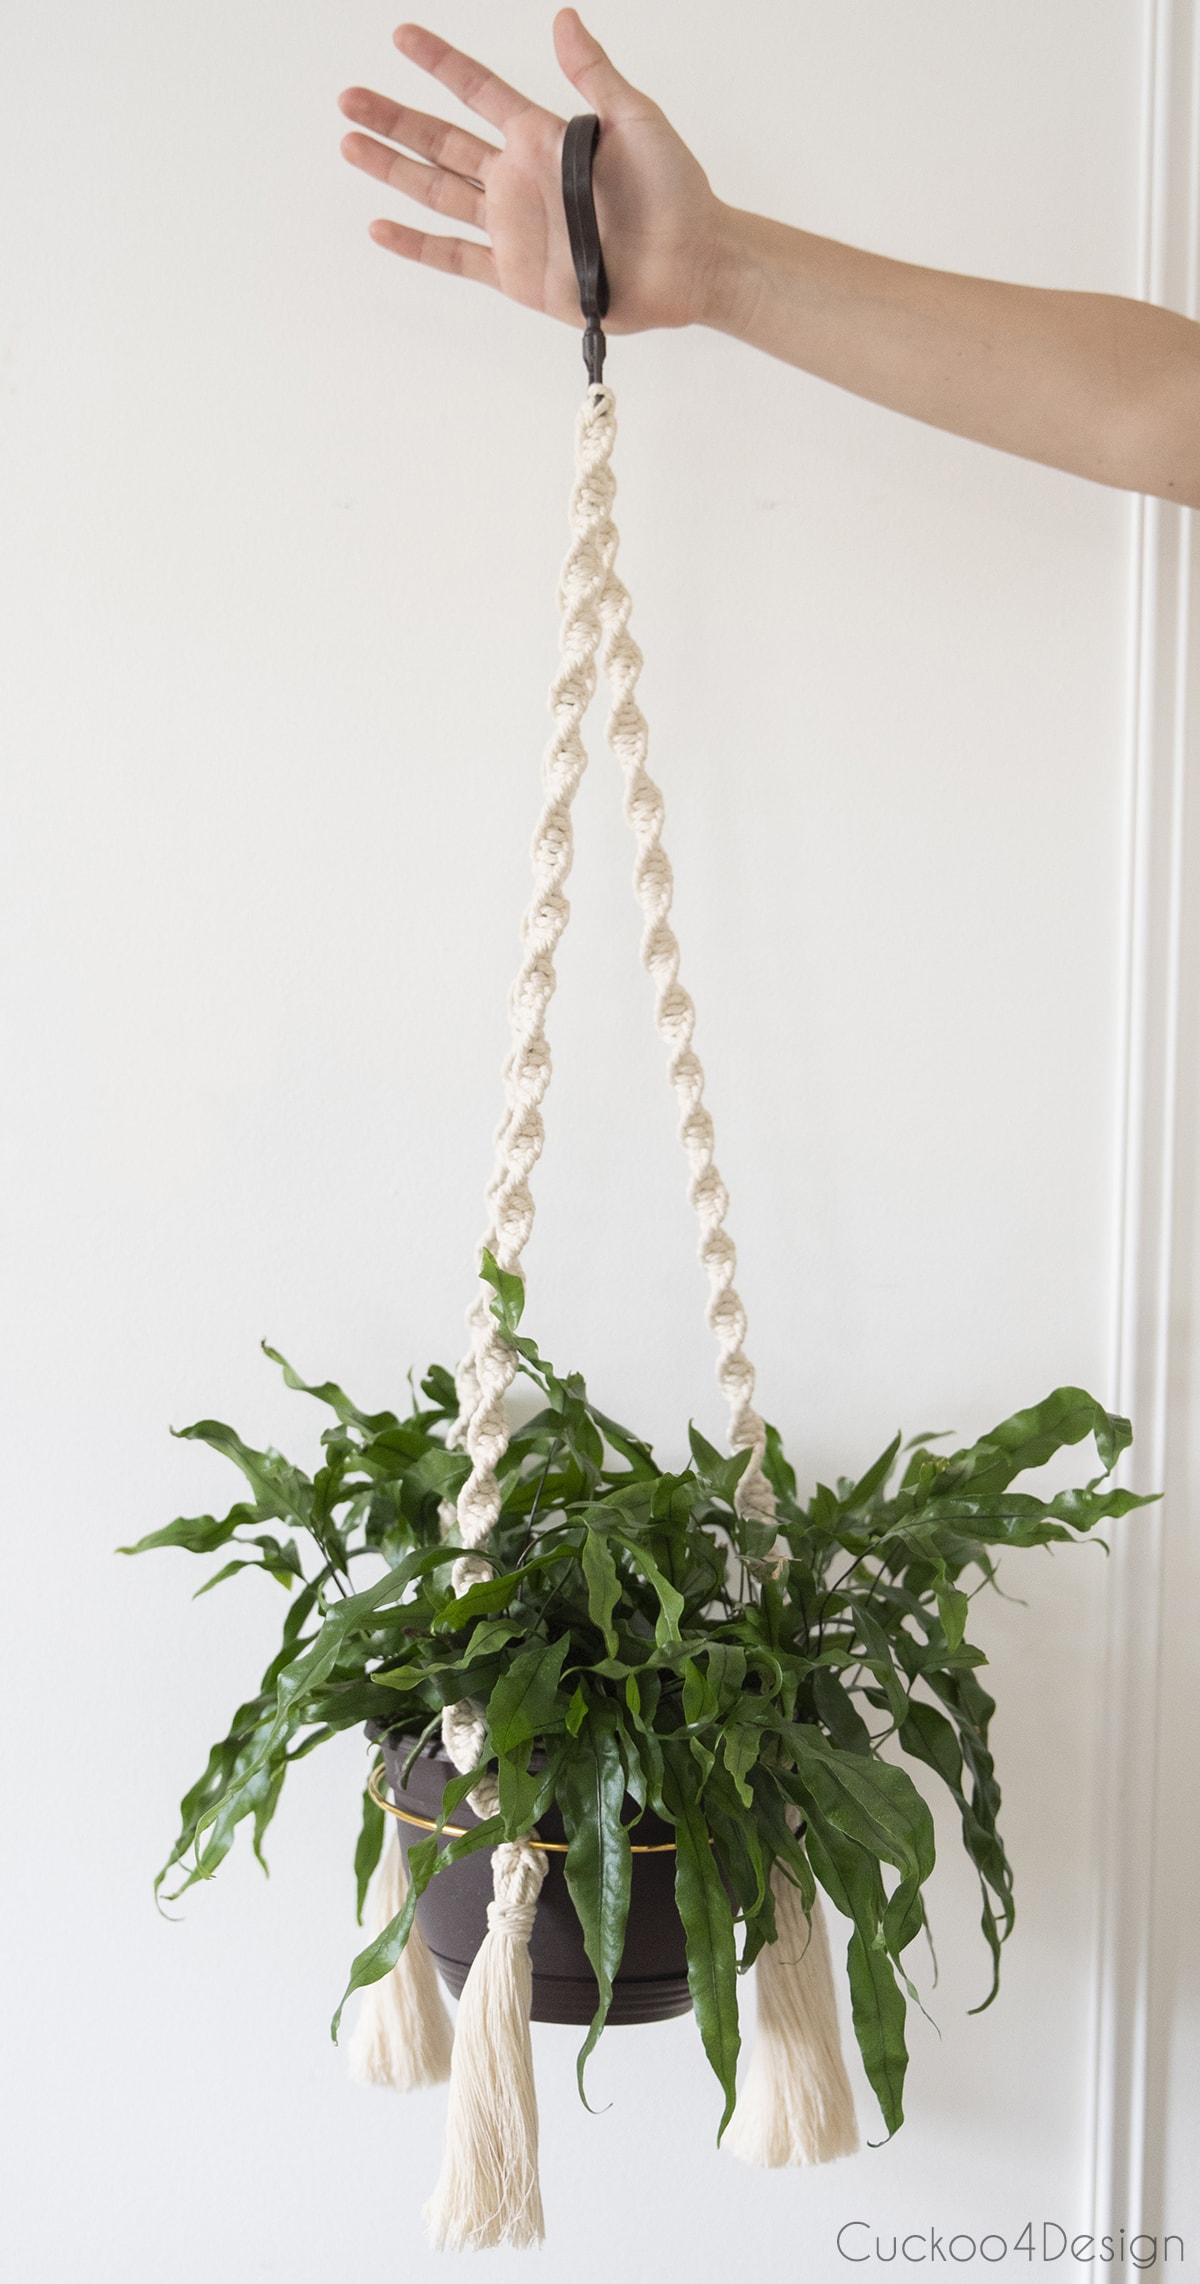 arm holding finished macrame hanging planter to show full length